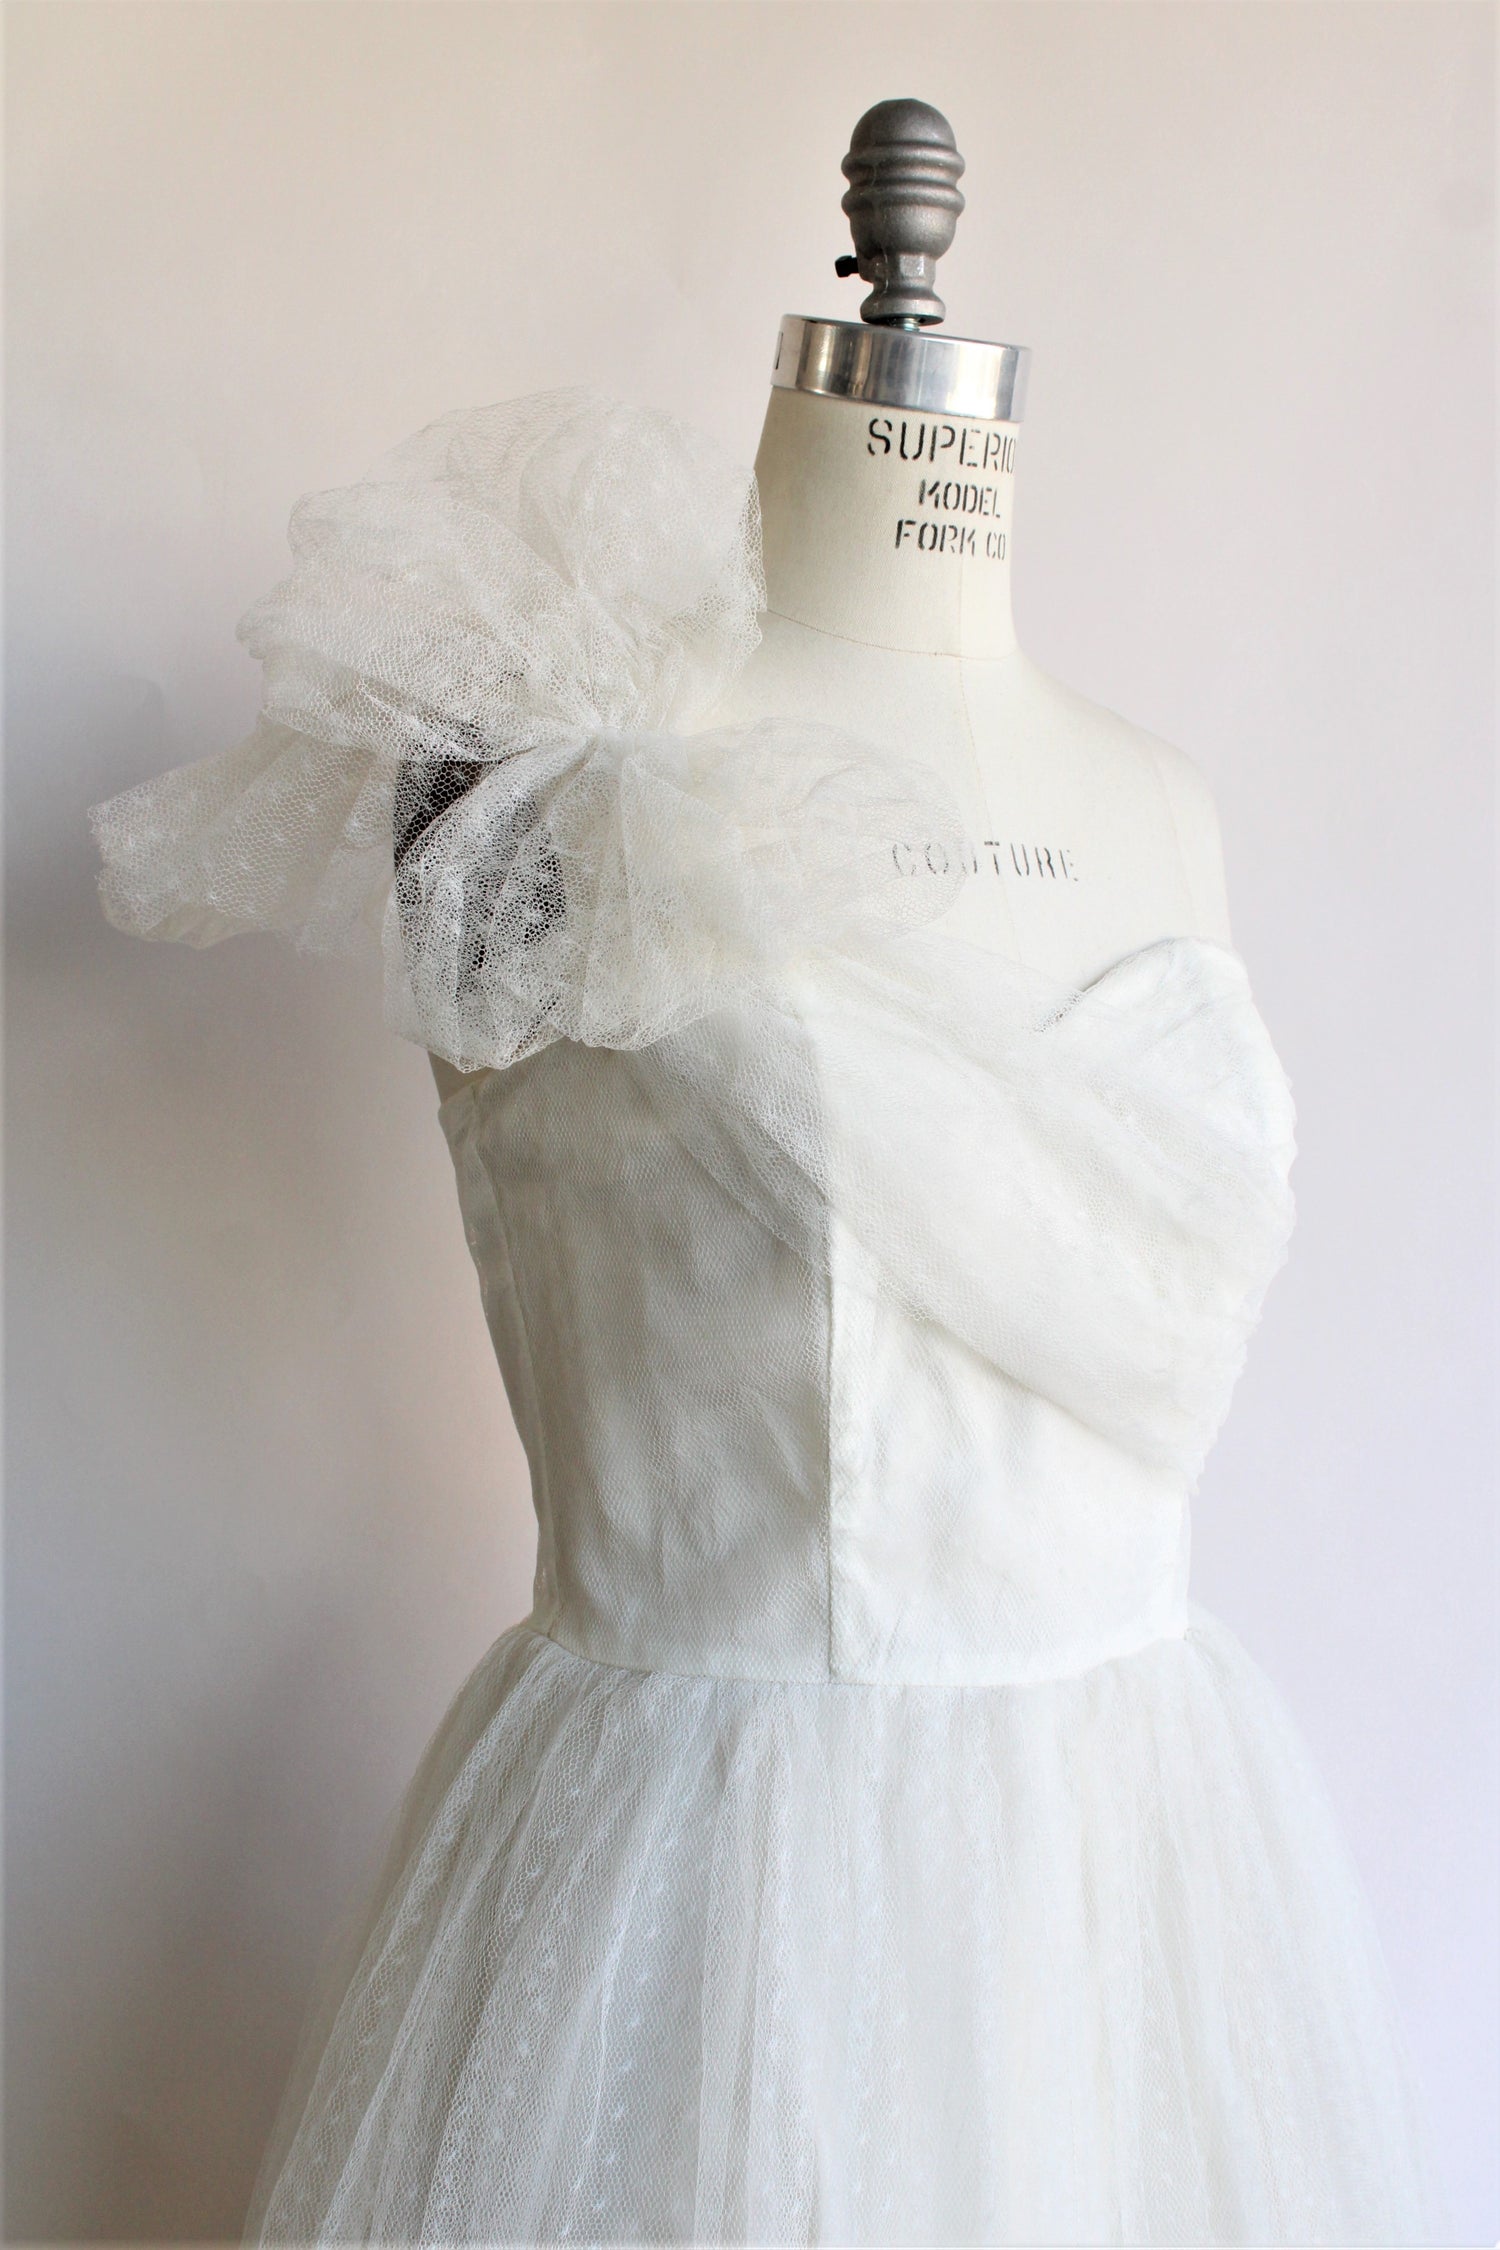 Vintage 1950s White Tulle Prom or Formal Dress